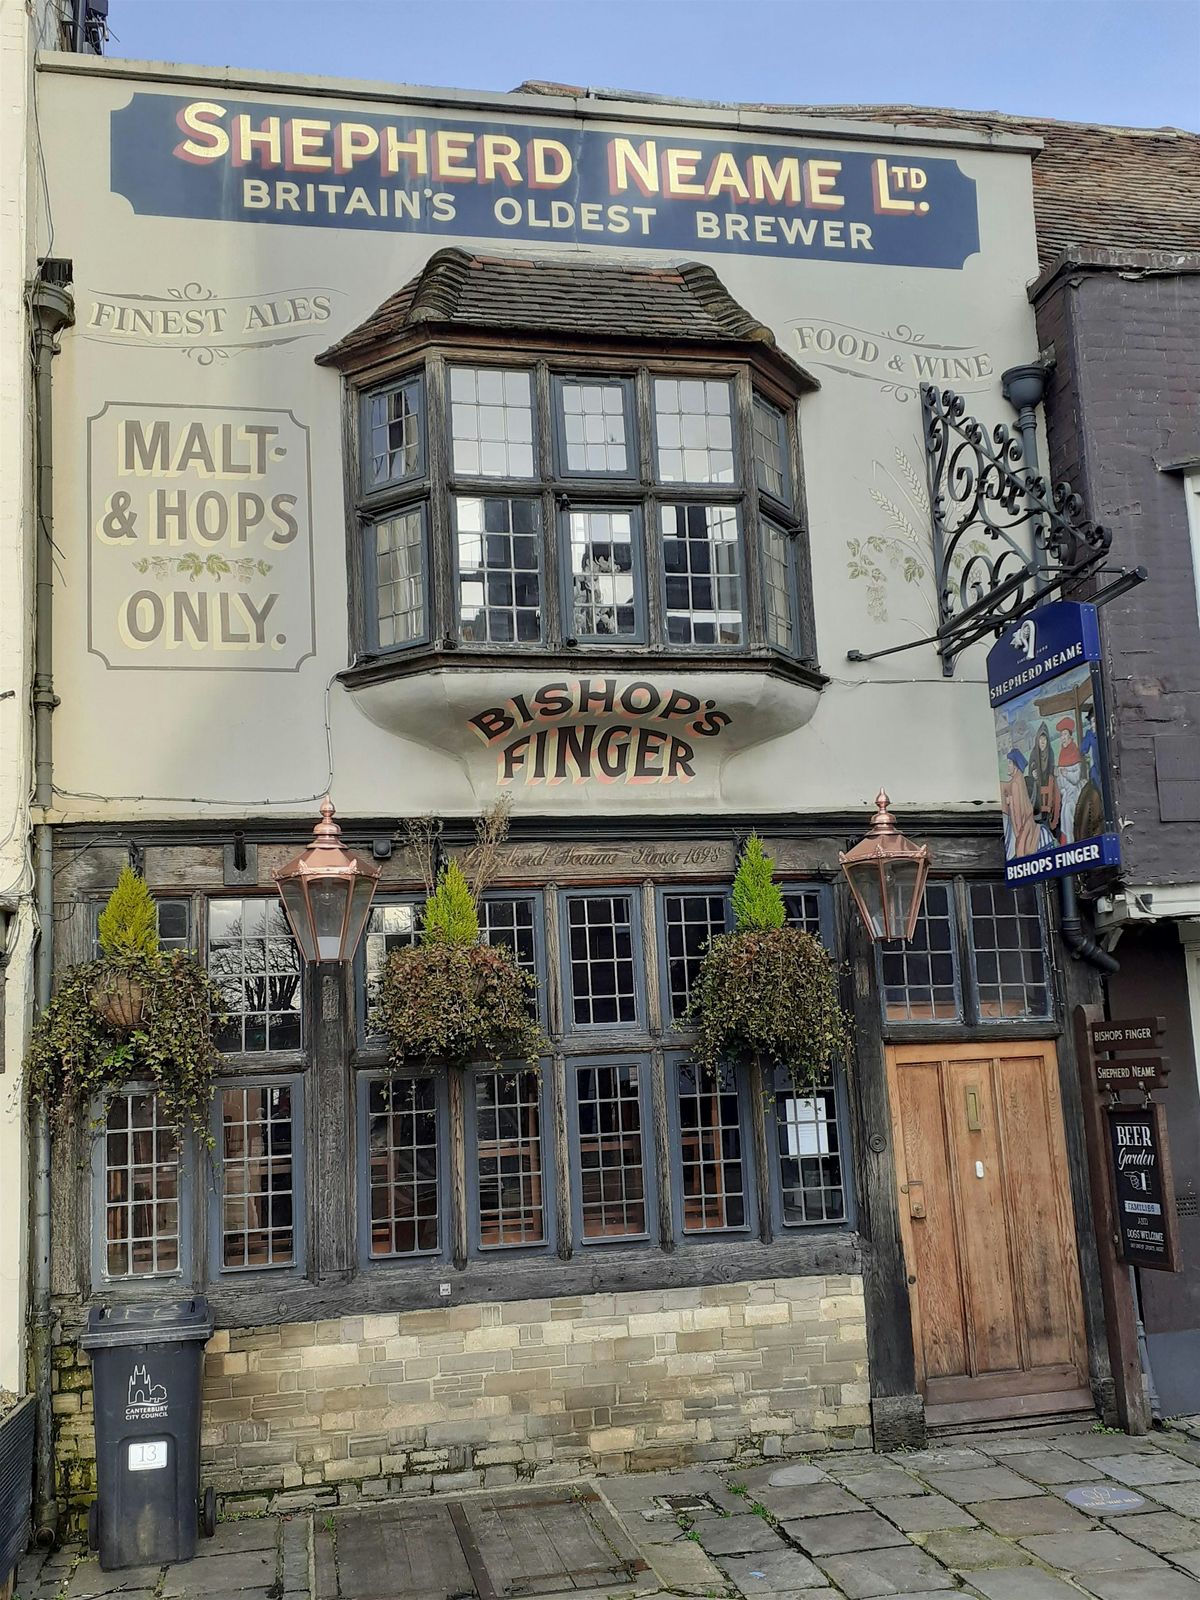 Fascinating tour around Canterbury's historic pubs